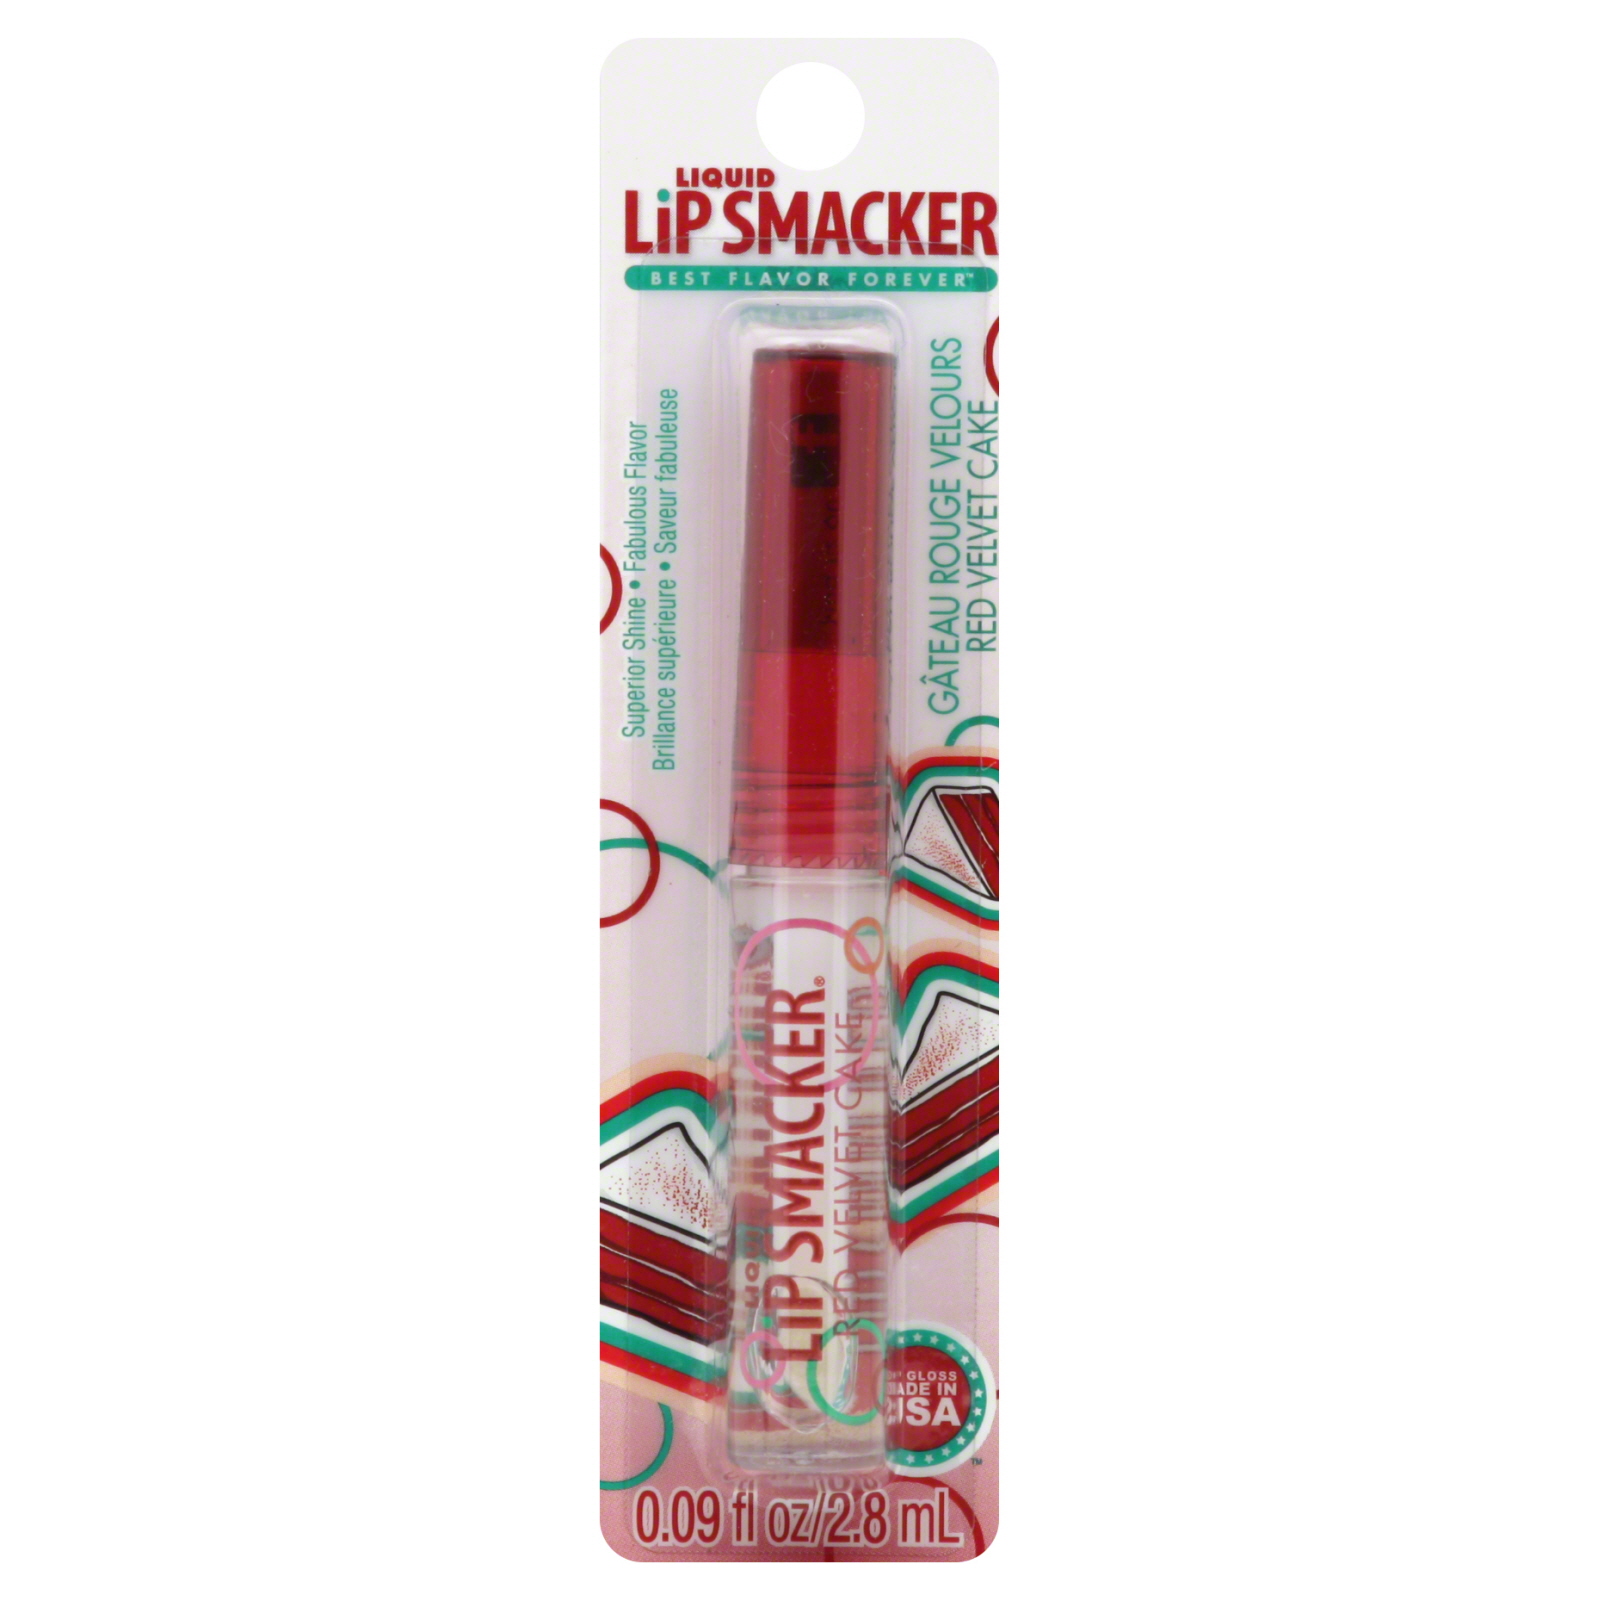 Lip Smacker Liquid Lip Limited Edition, Rotate, 0.09 oz